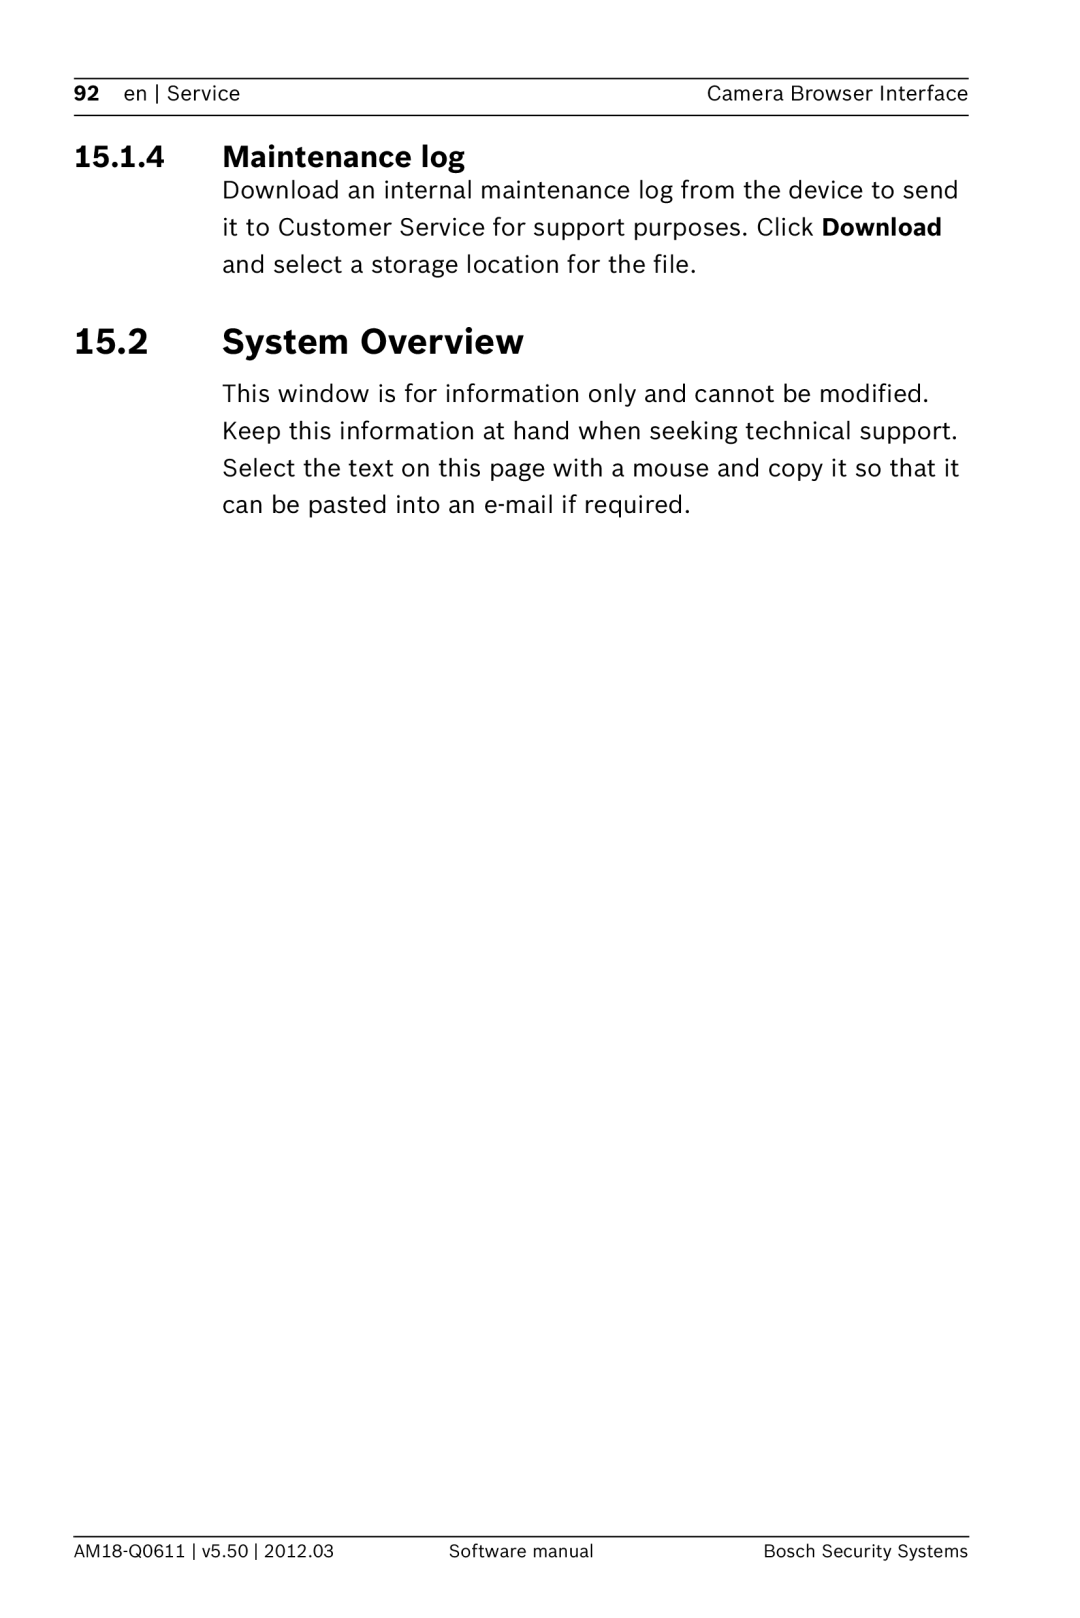 Bosch Appliances FW5.50 software manual 15.2System Overview, 15.1.4Maintenance log 